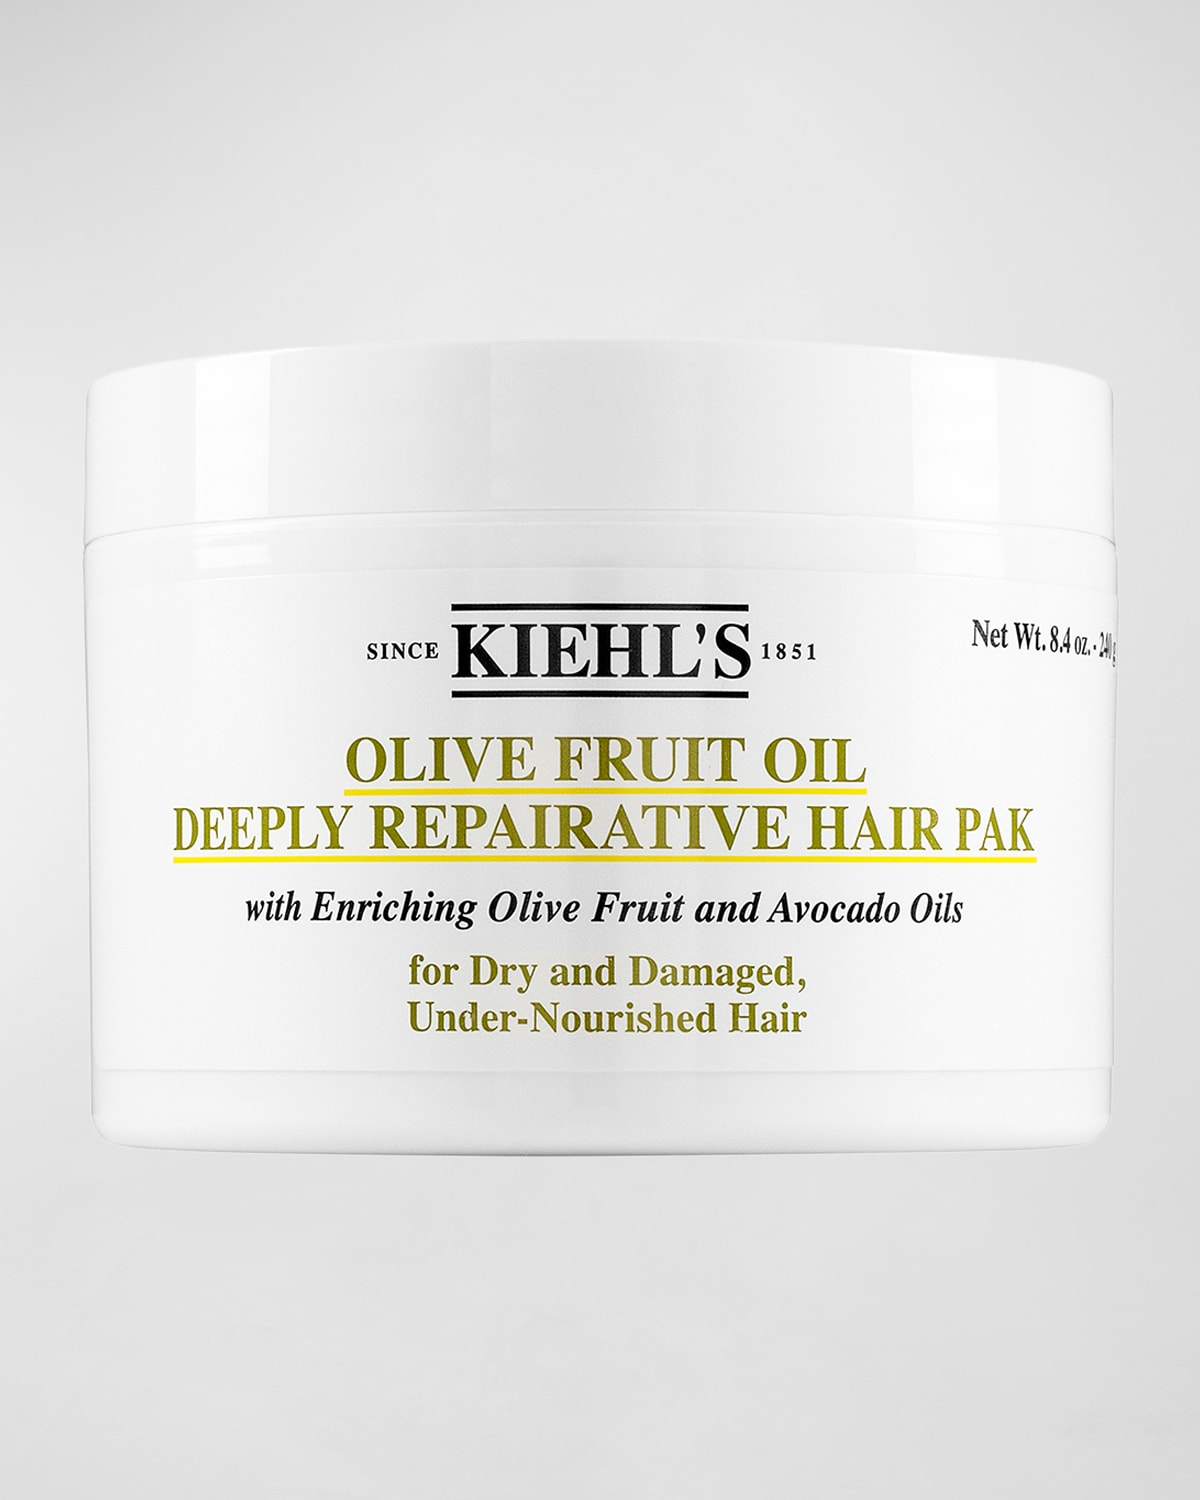 8.4 oz. Olive Fruit Oil Deeply Repairative Hair Pak